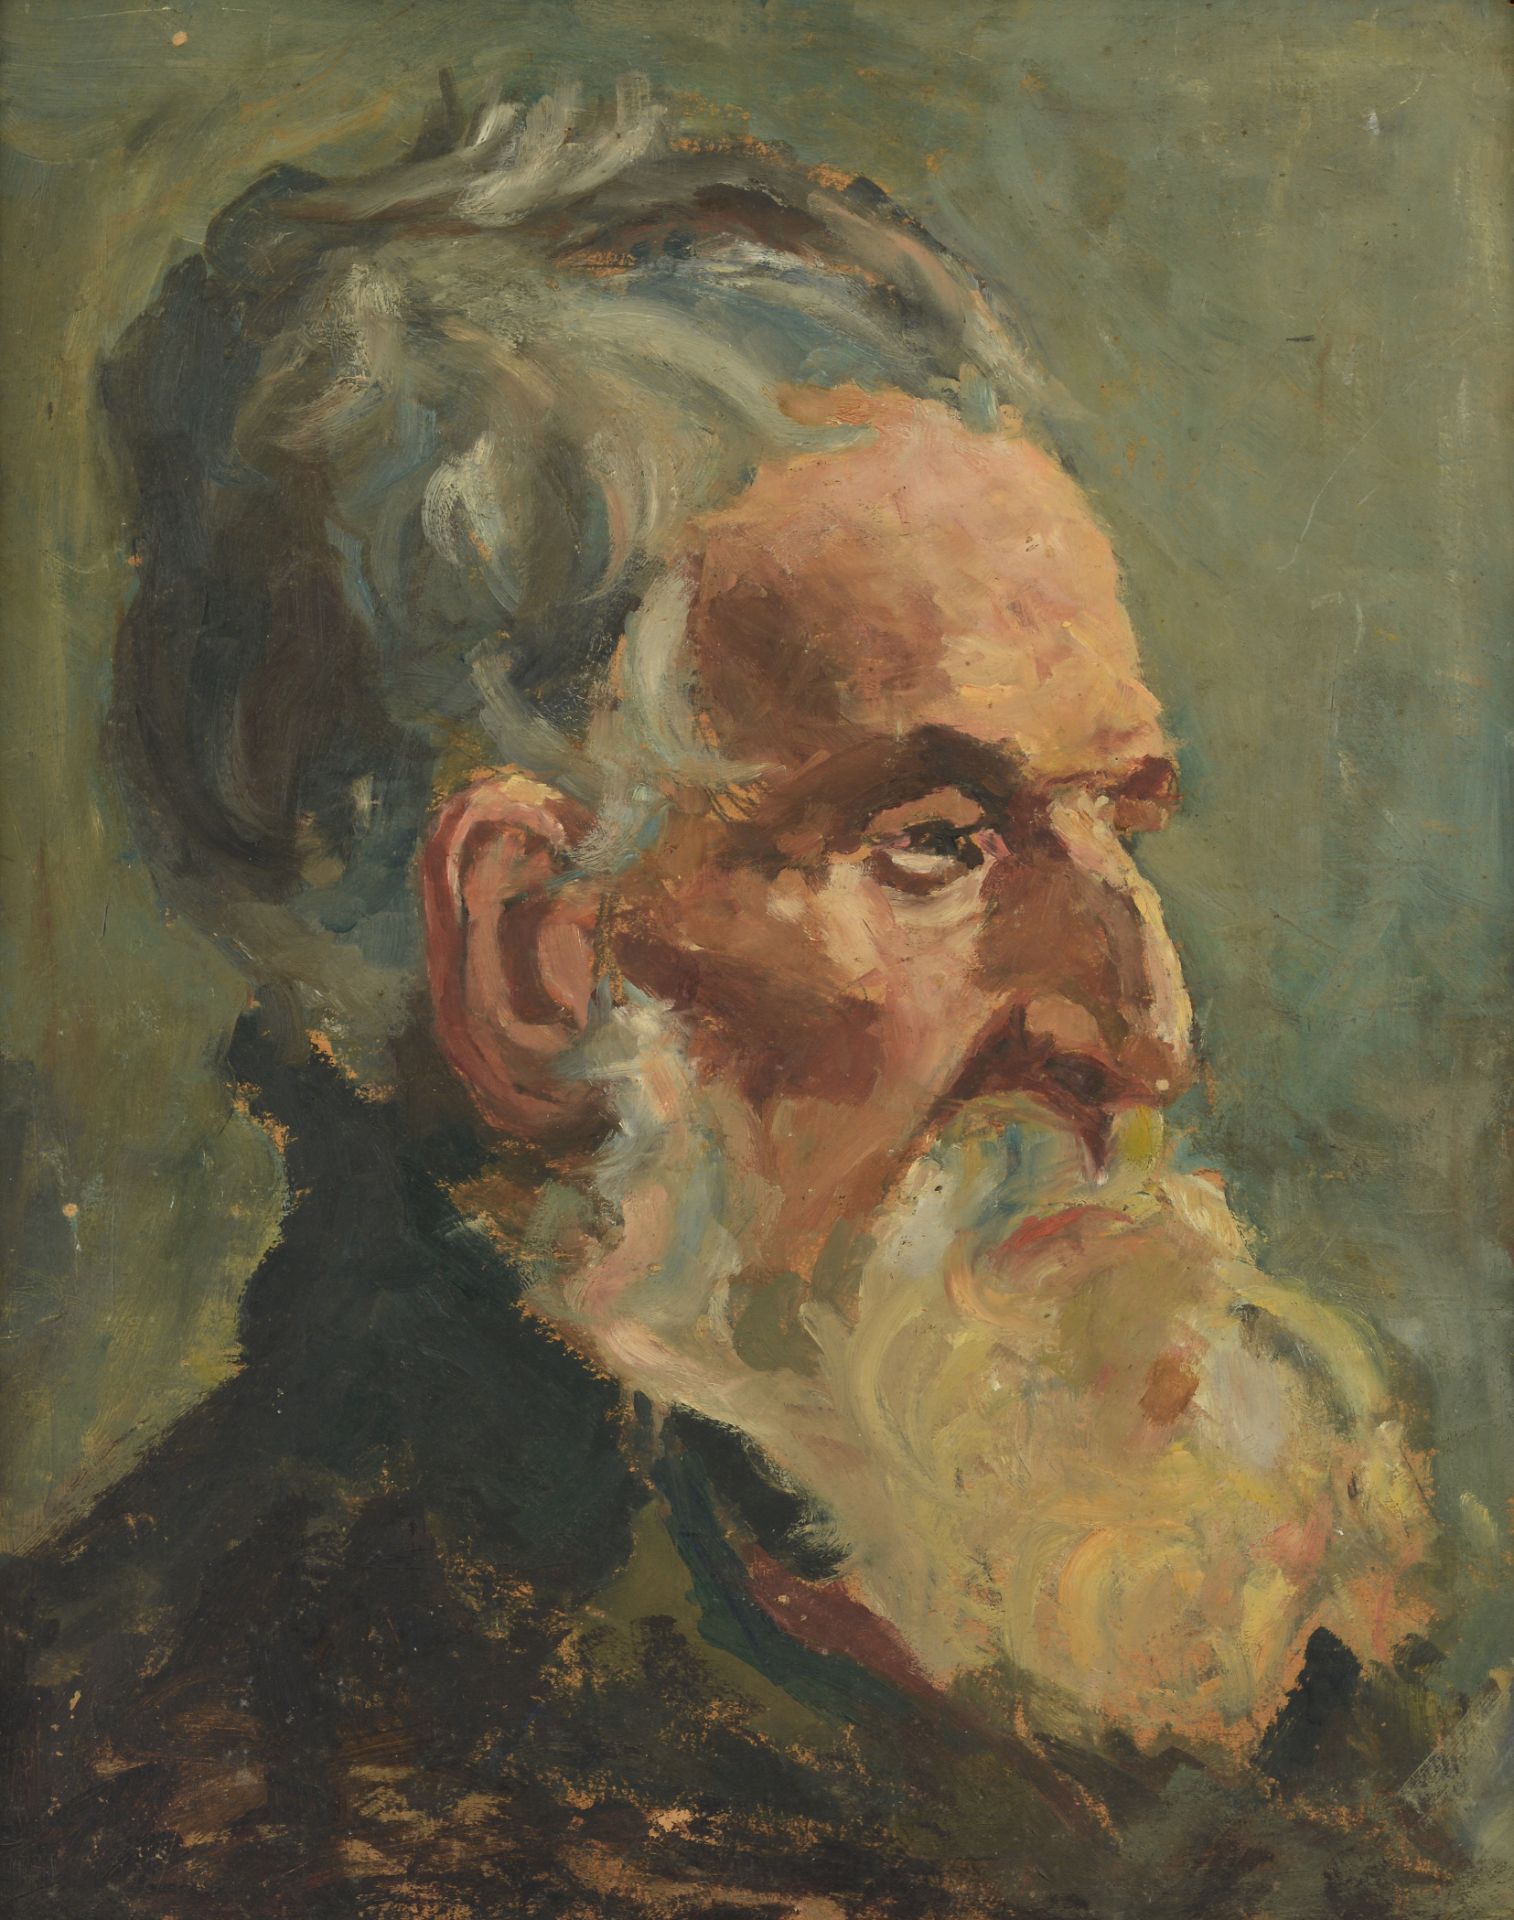 LEONID TSONEV YORDANOV /1910-1999/ „Portrait of an elderly man with a beard“